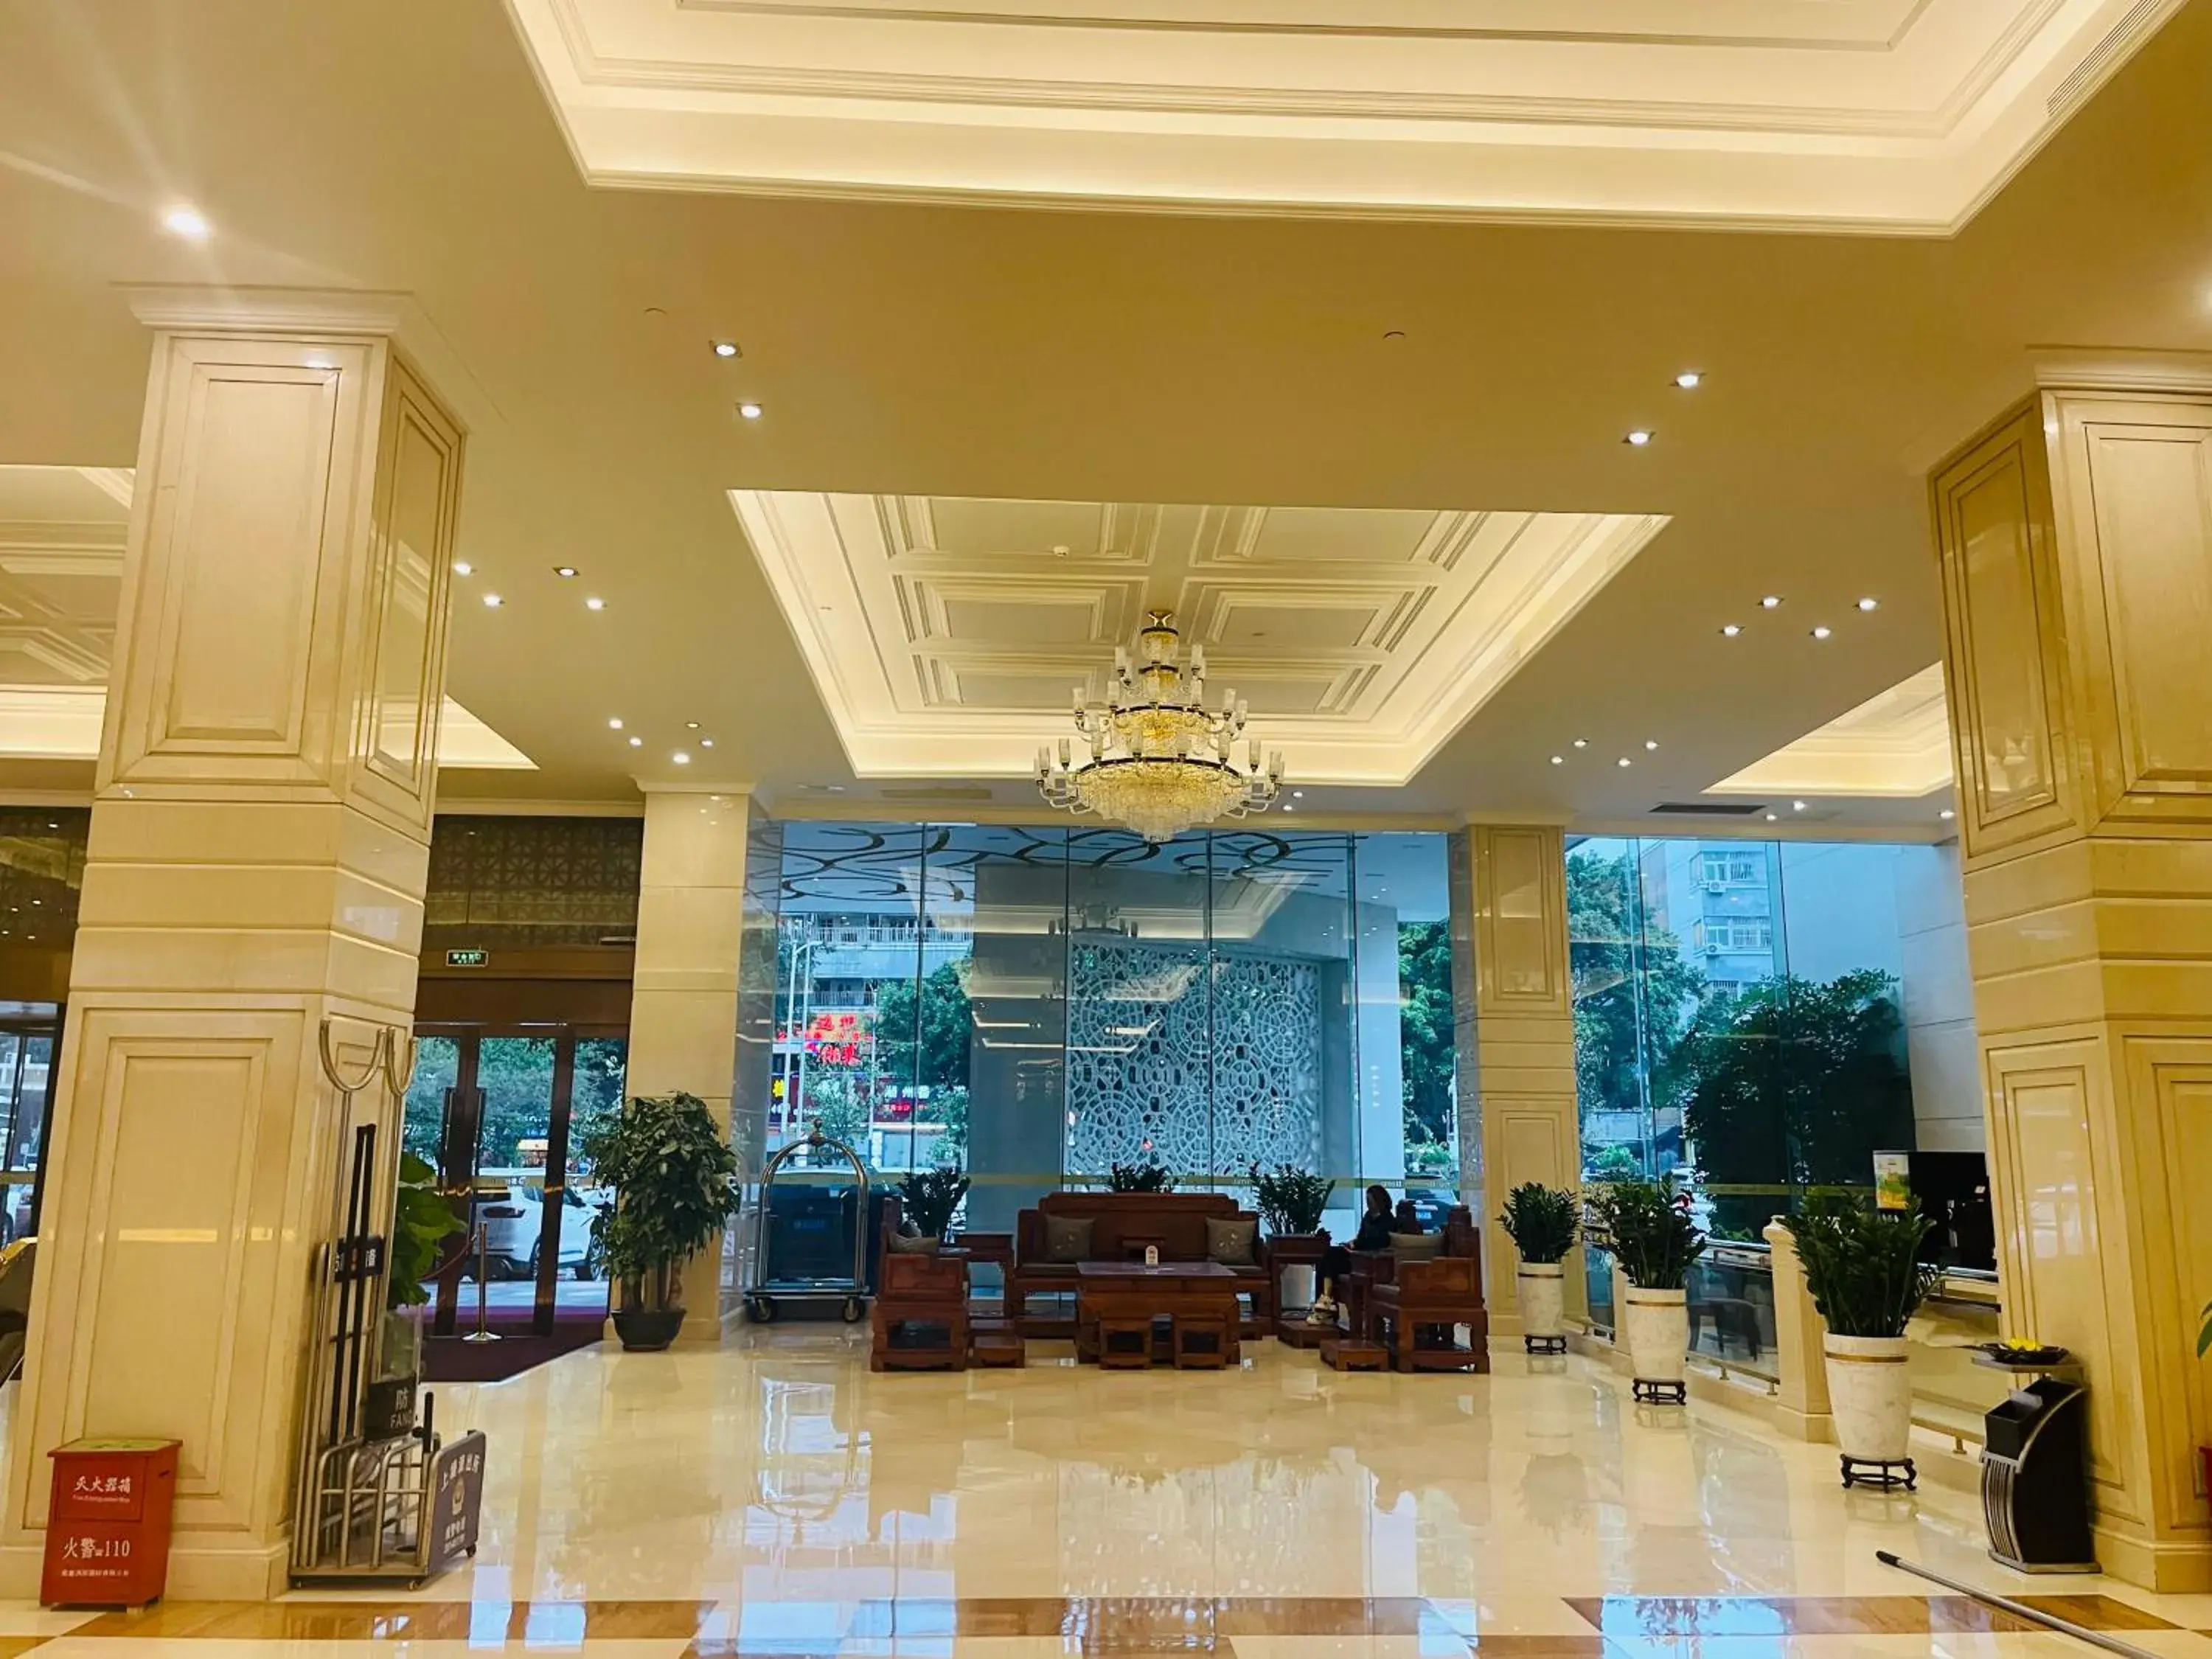 Lobby or reception in Shenzhen Shuidu Holiday Hotel, North Railway Station